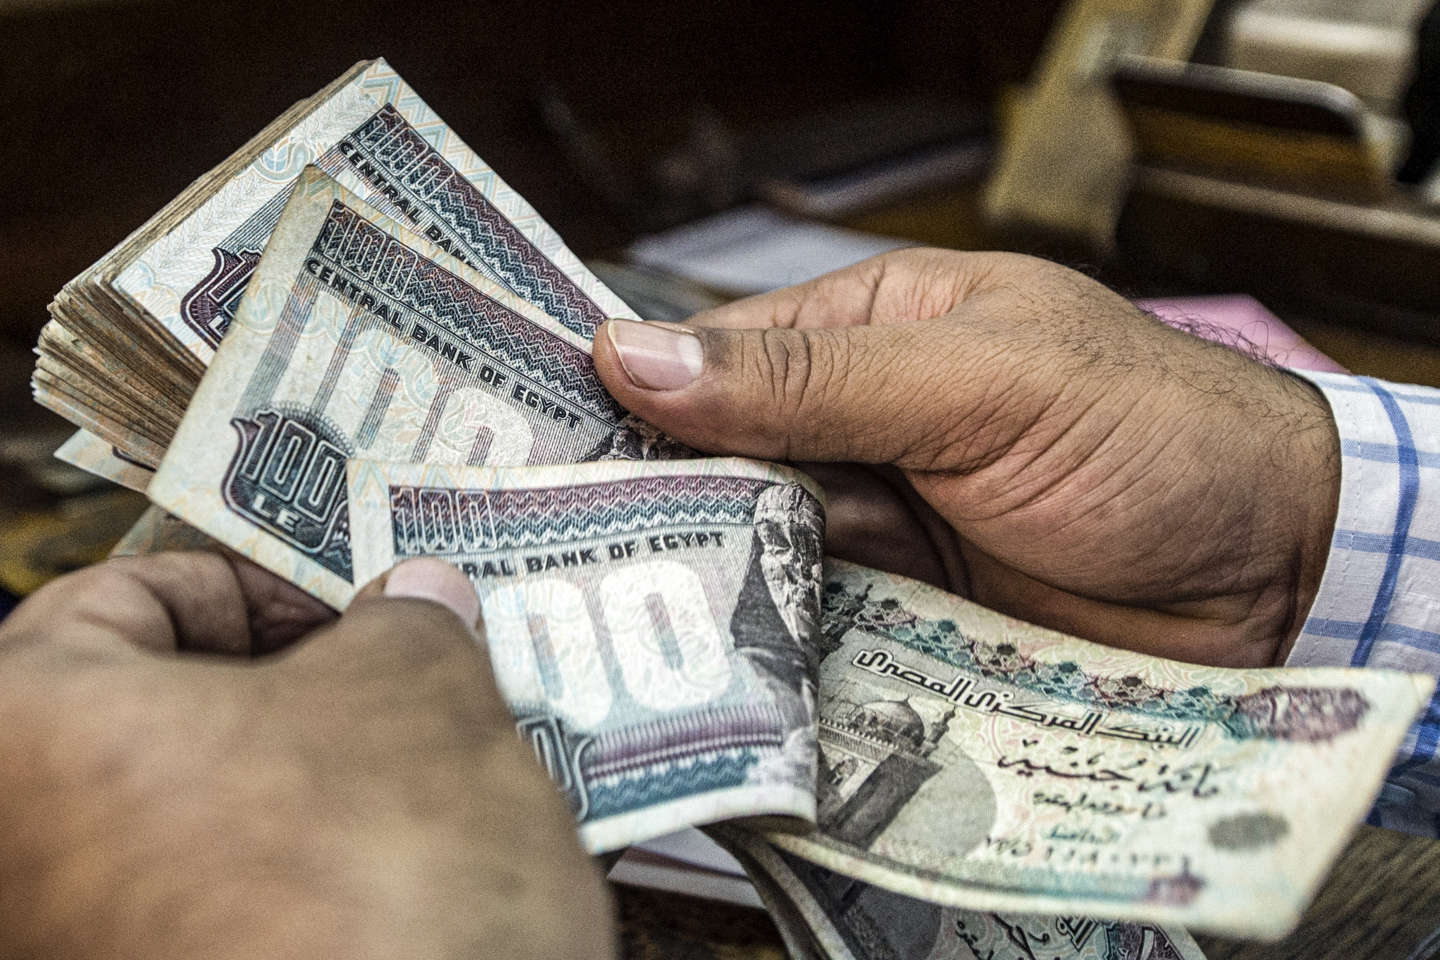 Egypte: L'inflation globale grimpe à 32,7% en mars